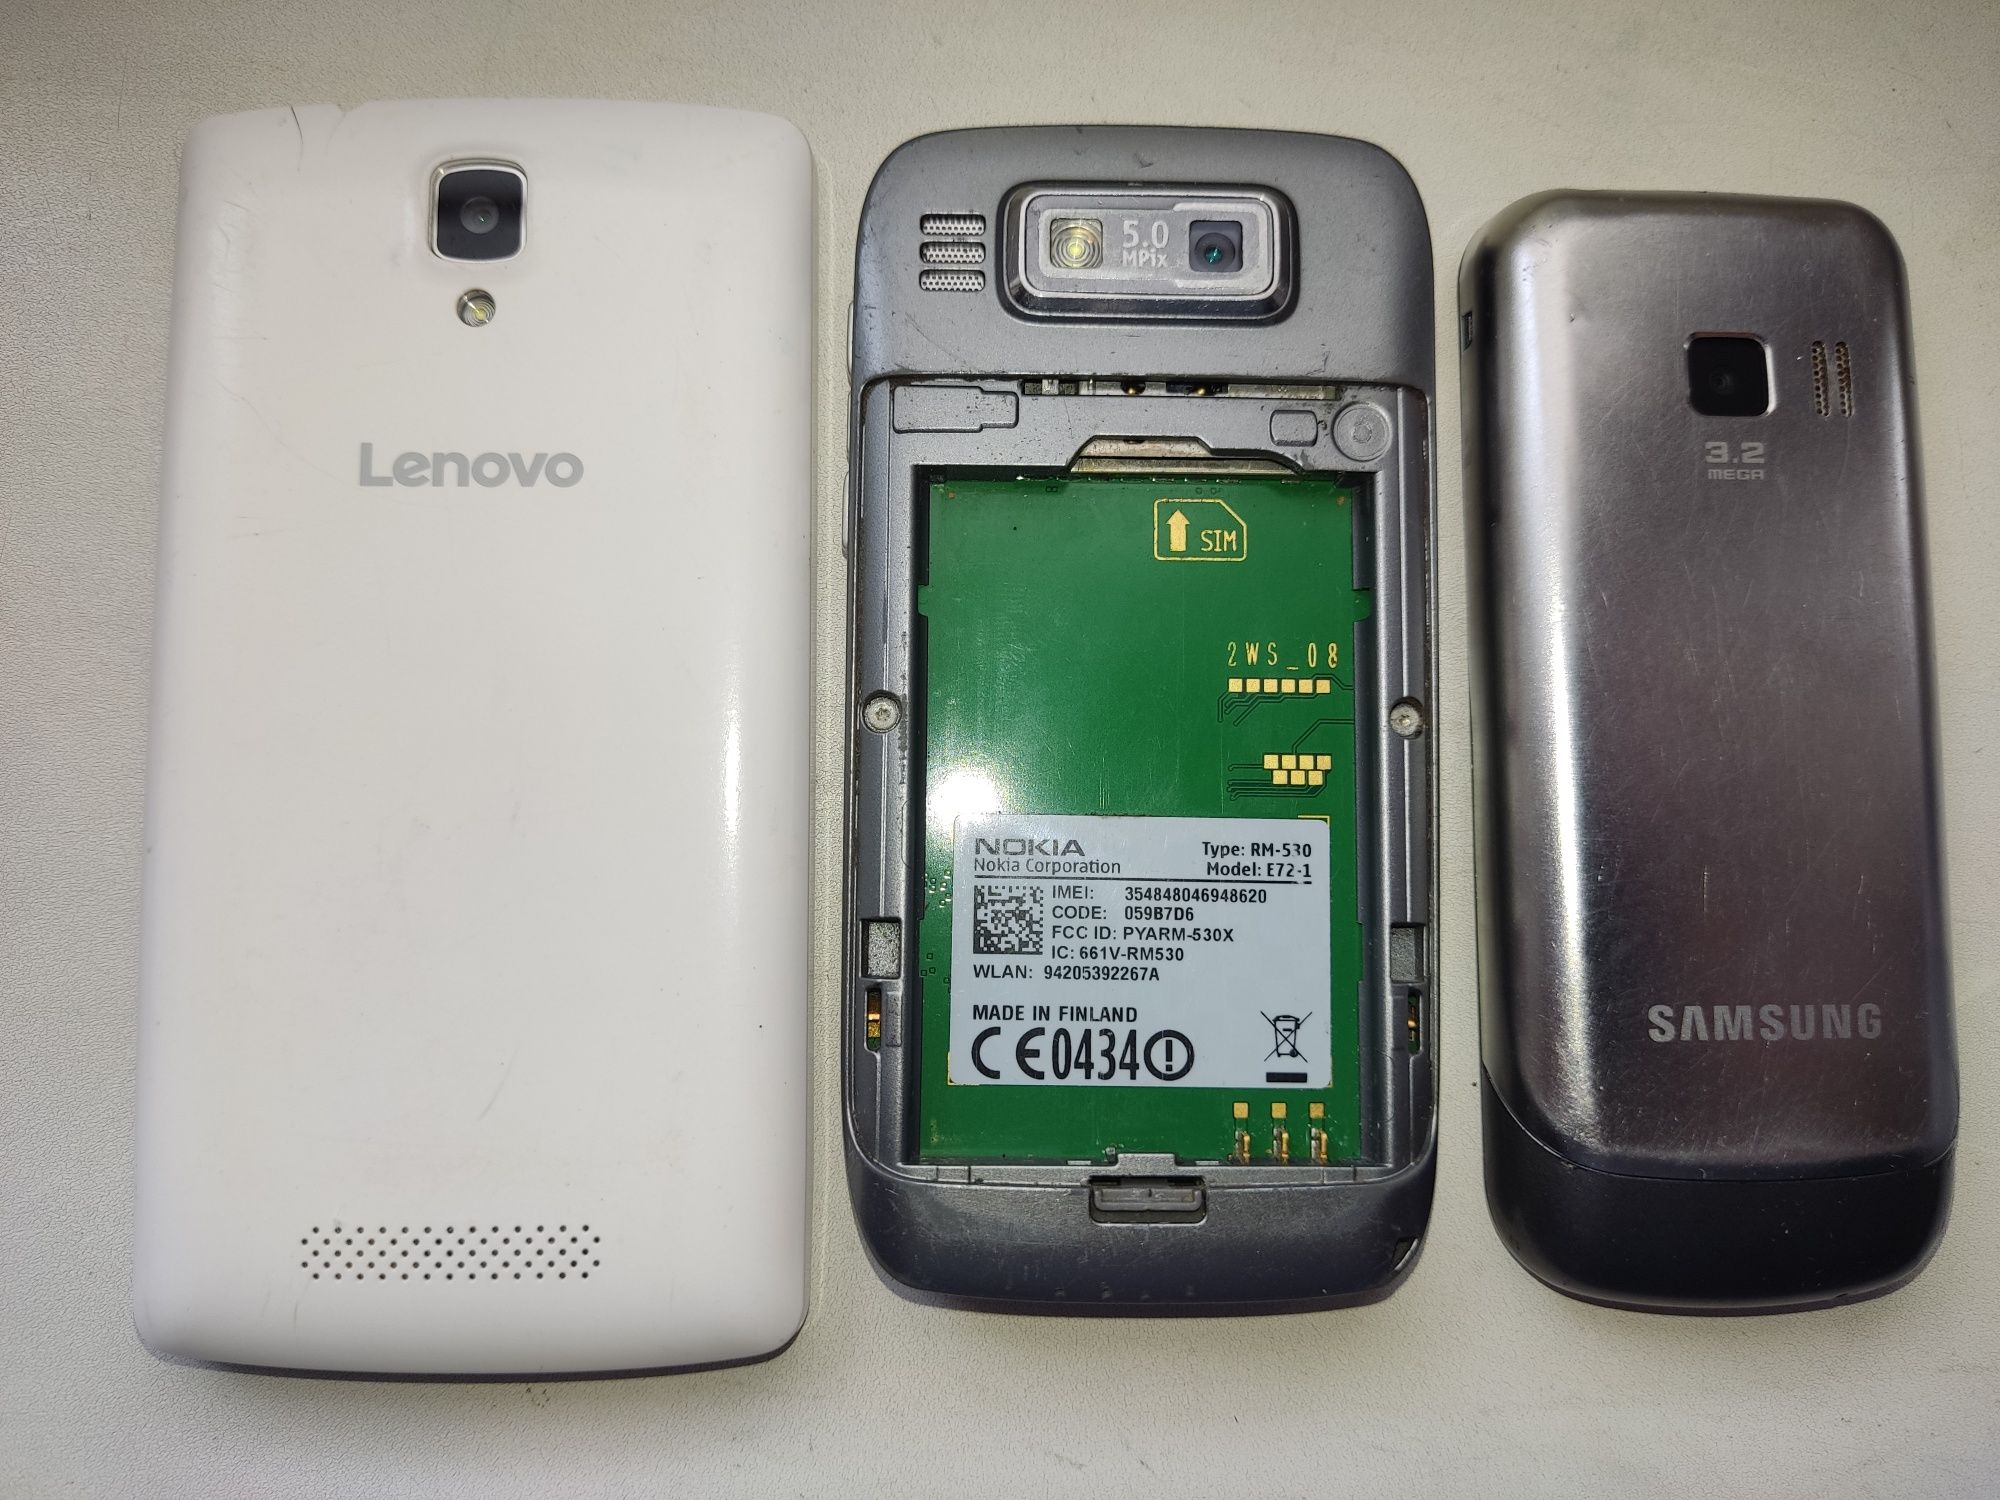 Nokia E72 Samsung GT-C3530 Lenovo 1 sztuka A1000m